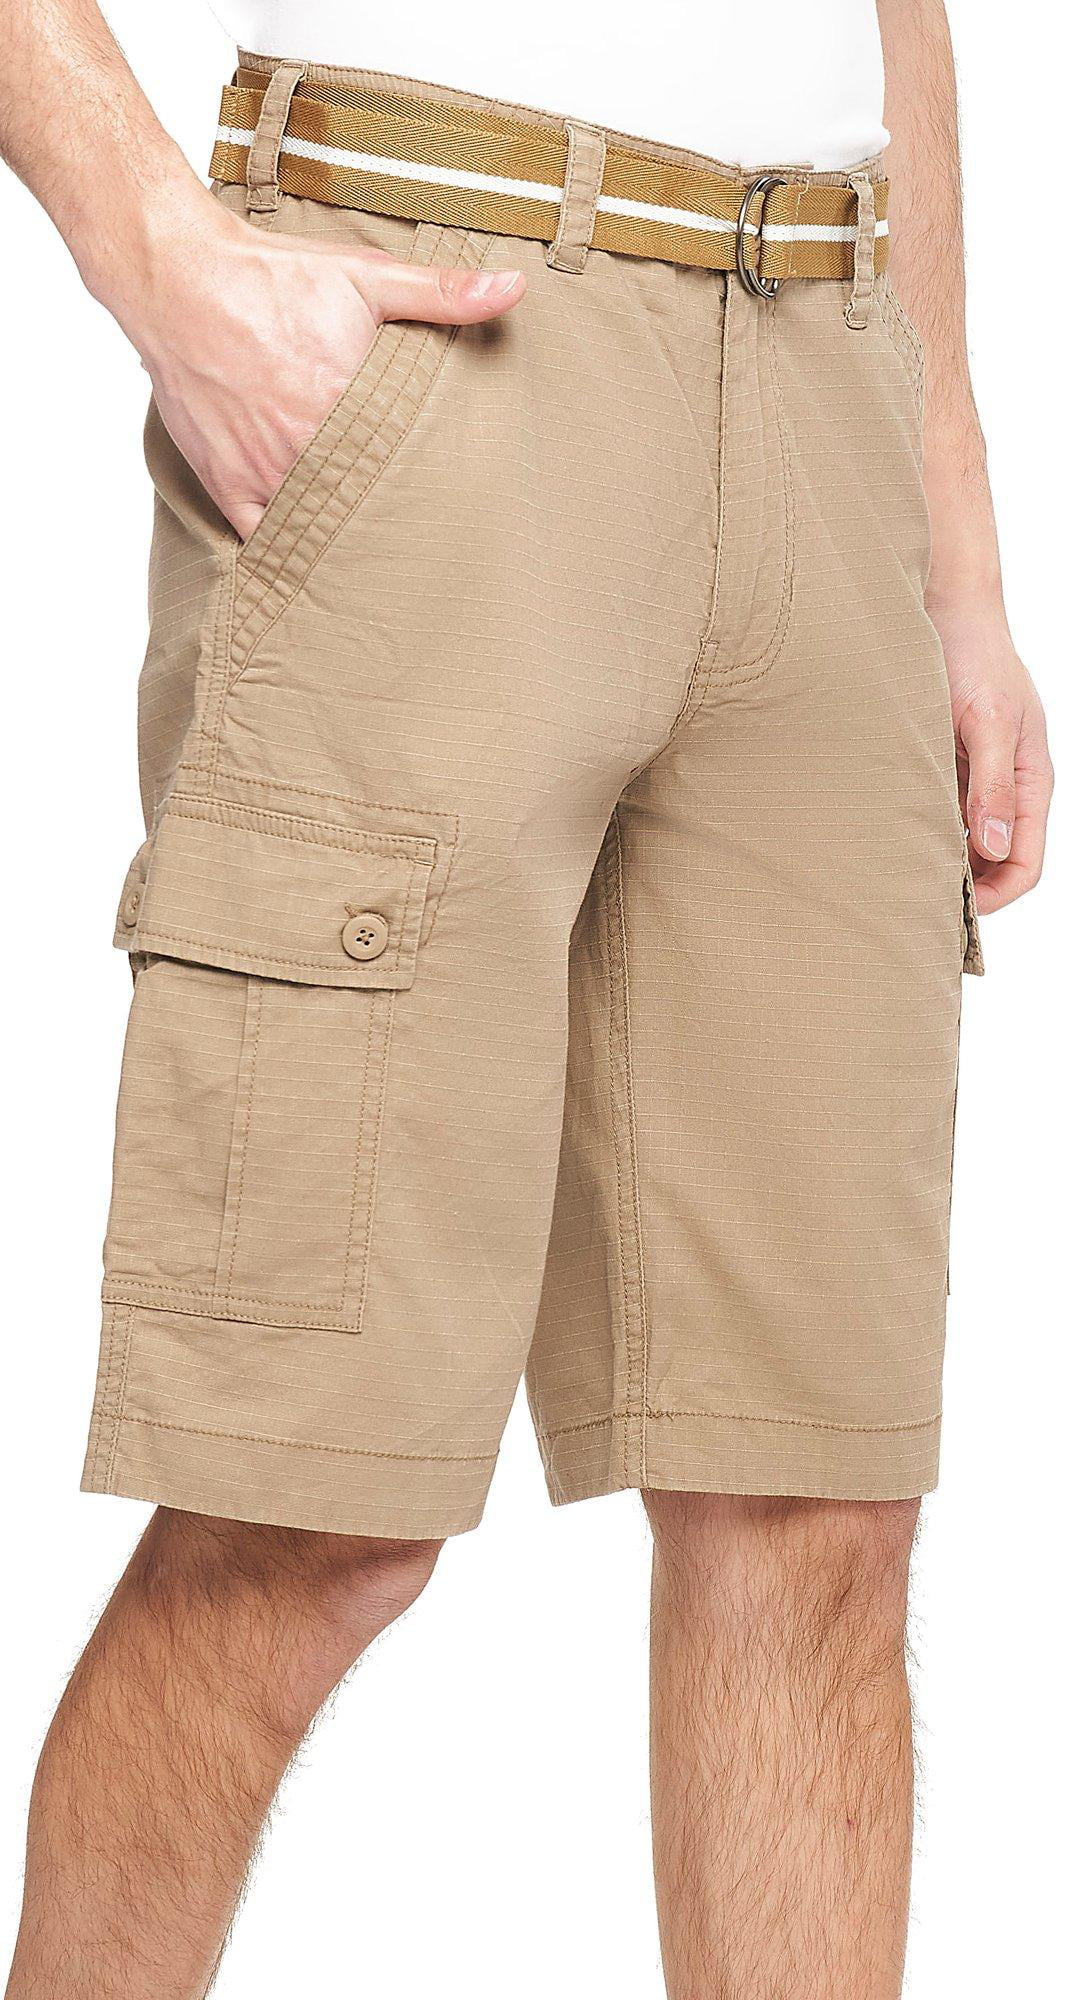 Boys Shorts with 6 Pockets Boys Cargo Shorts Legacy Ripstop Cargo Short